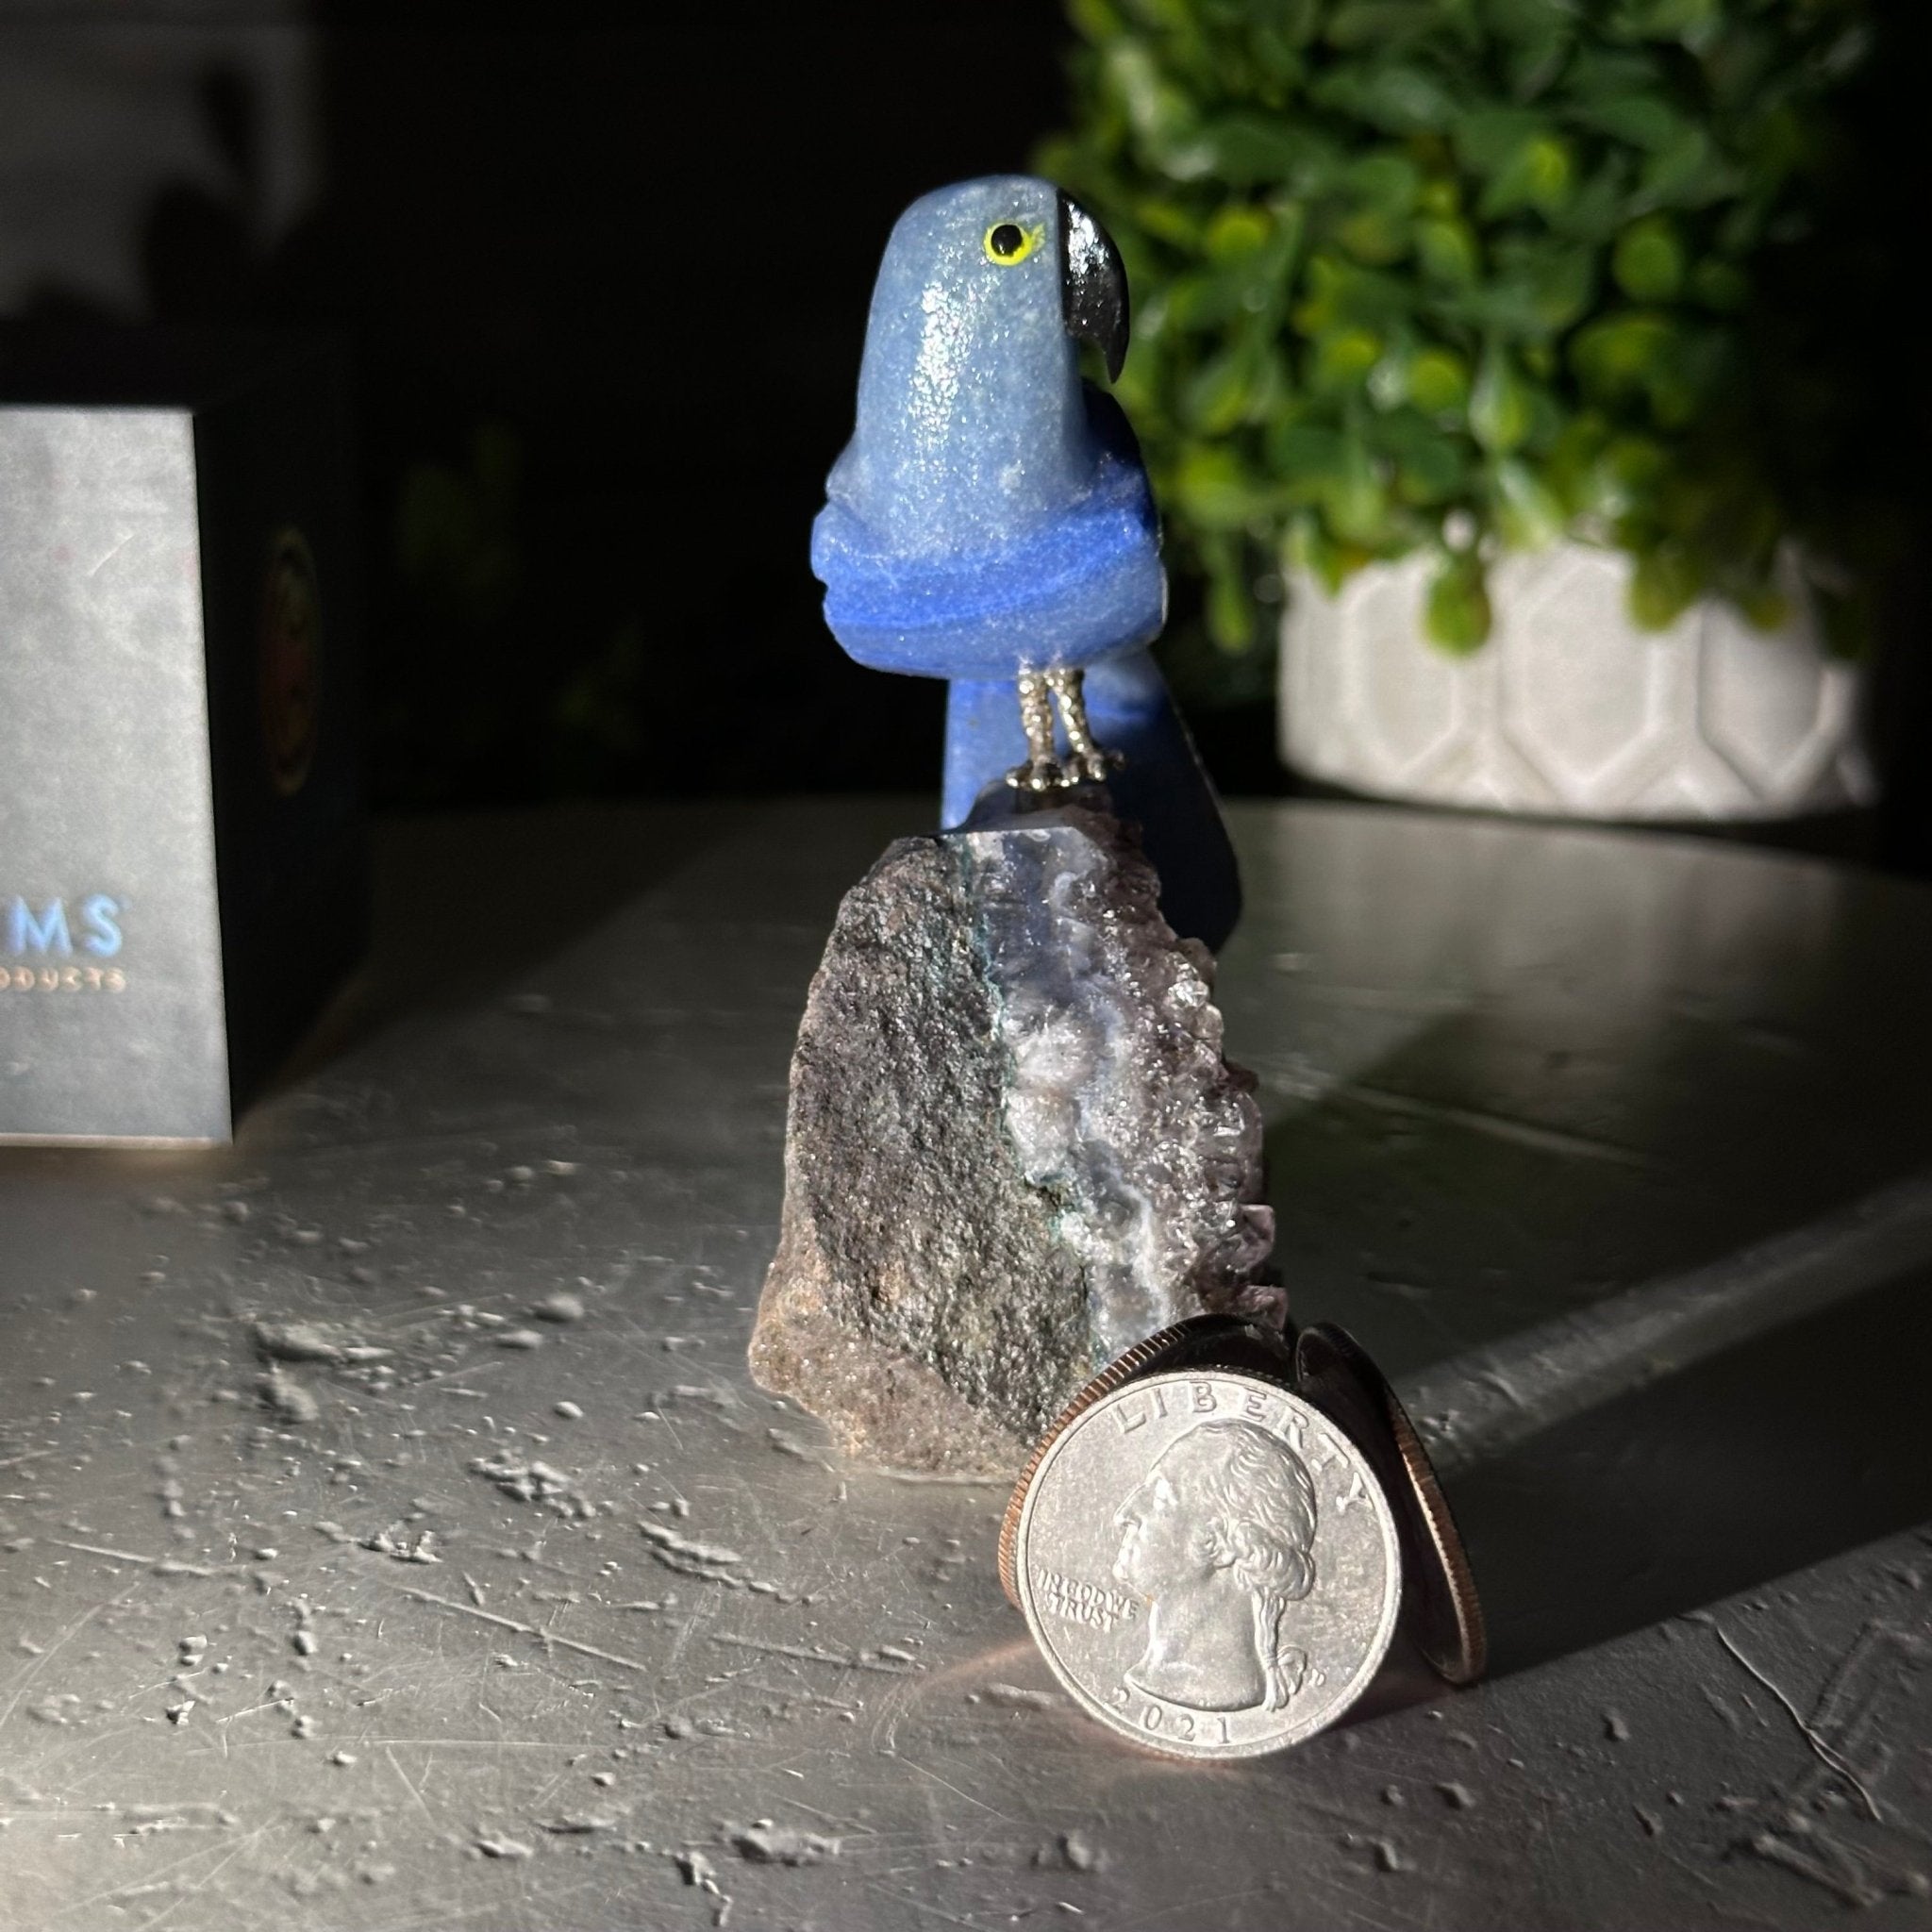 Hand-Carved Crystal Bird, Blue Quartz Parrot, Amethyst Base, 3.6" Tall #3001-BQPAM-024 - Brazil GemsBrazil GemsHand-Carved Crystal Bird, Blue Quartz Parrot, Amethyst Base, 3.6" Tall #3001-BQPAM-024Crystal Birds3001-BQPAM-024